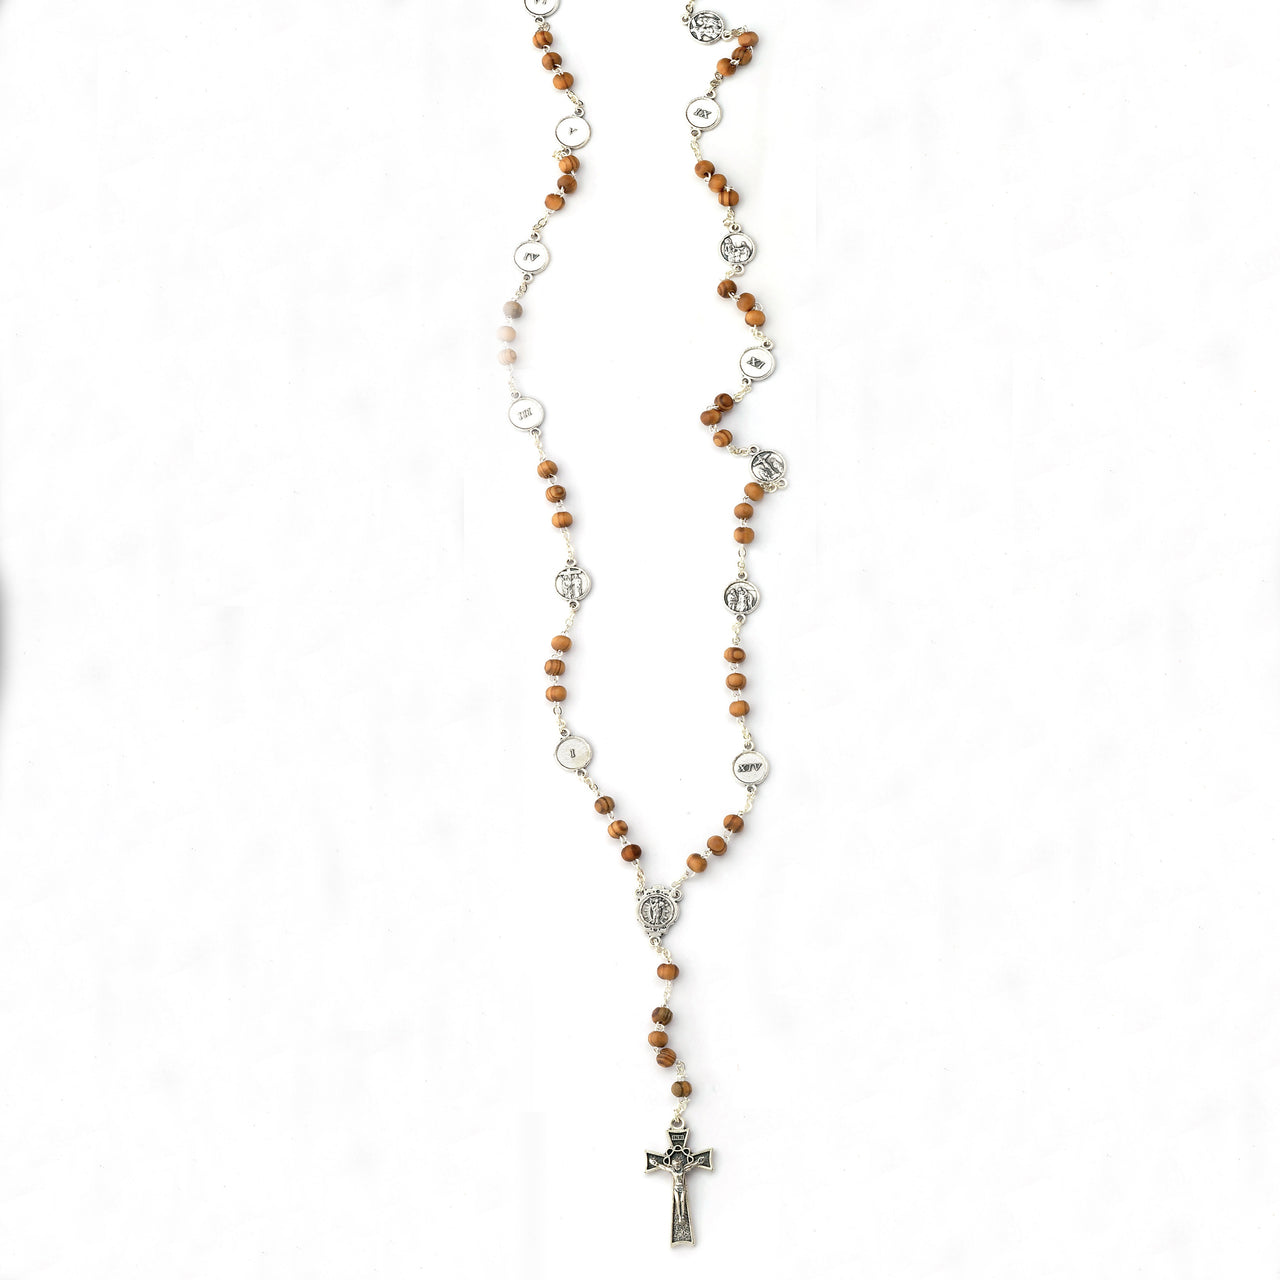 7mm Dark Wood Stations of the Cross Rosary (Via Crucis)